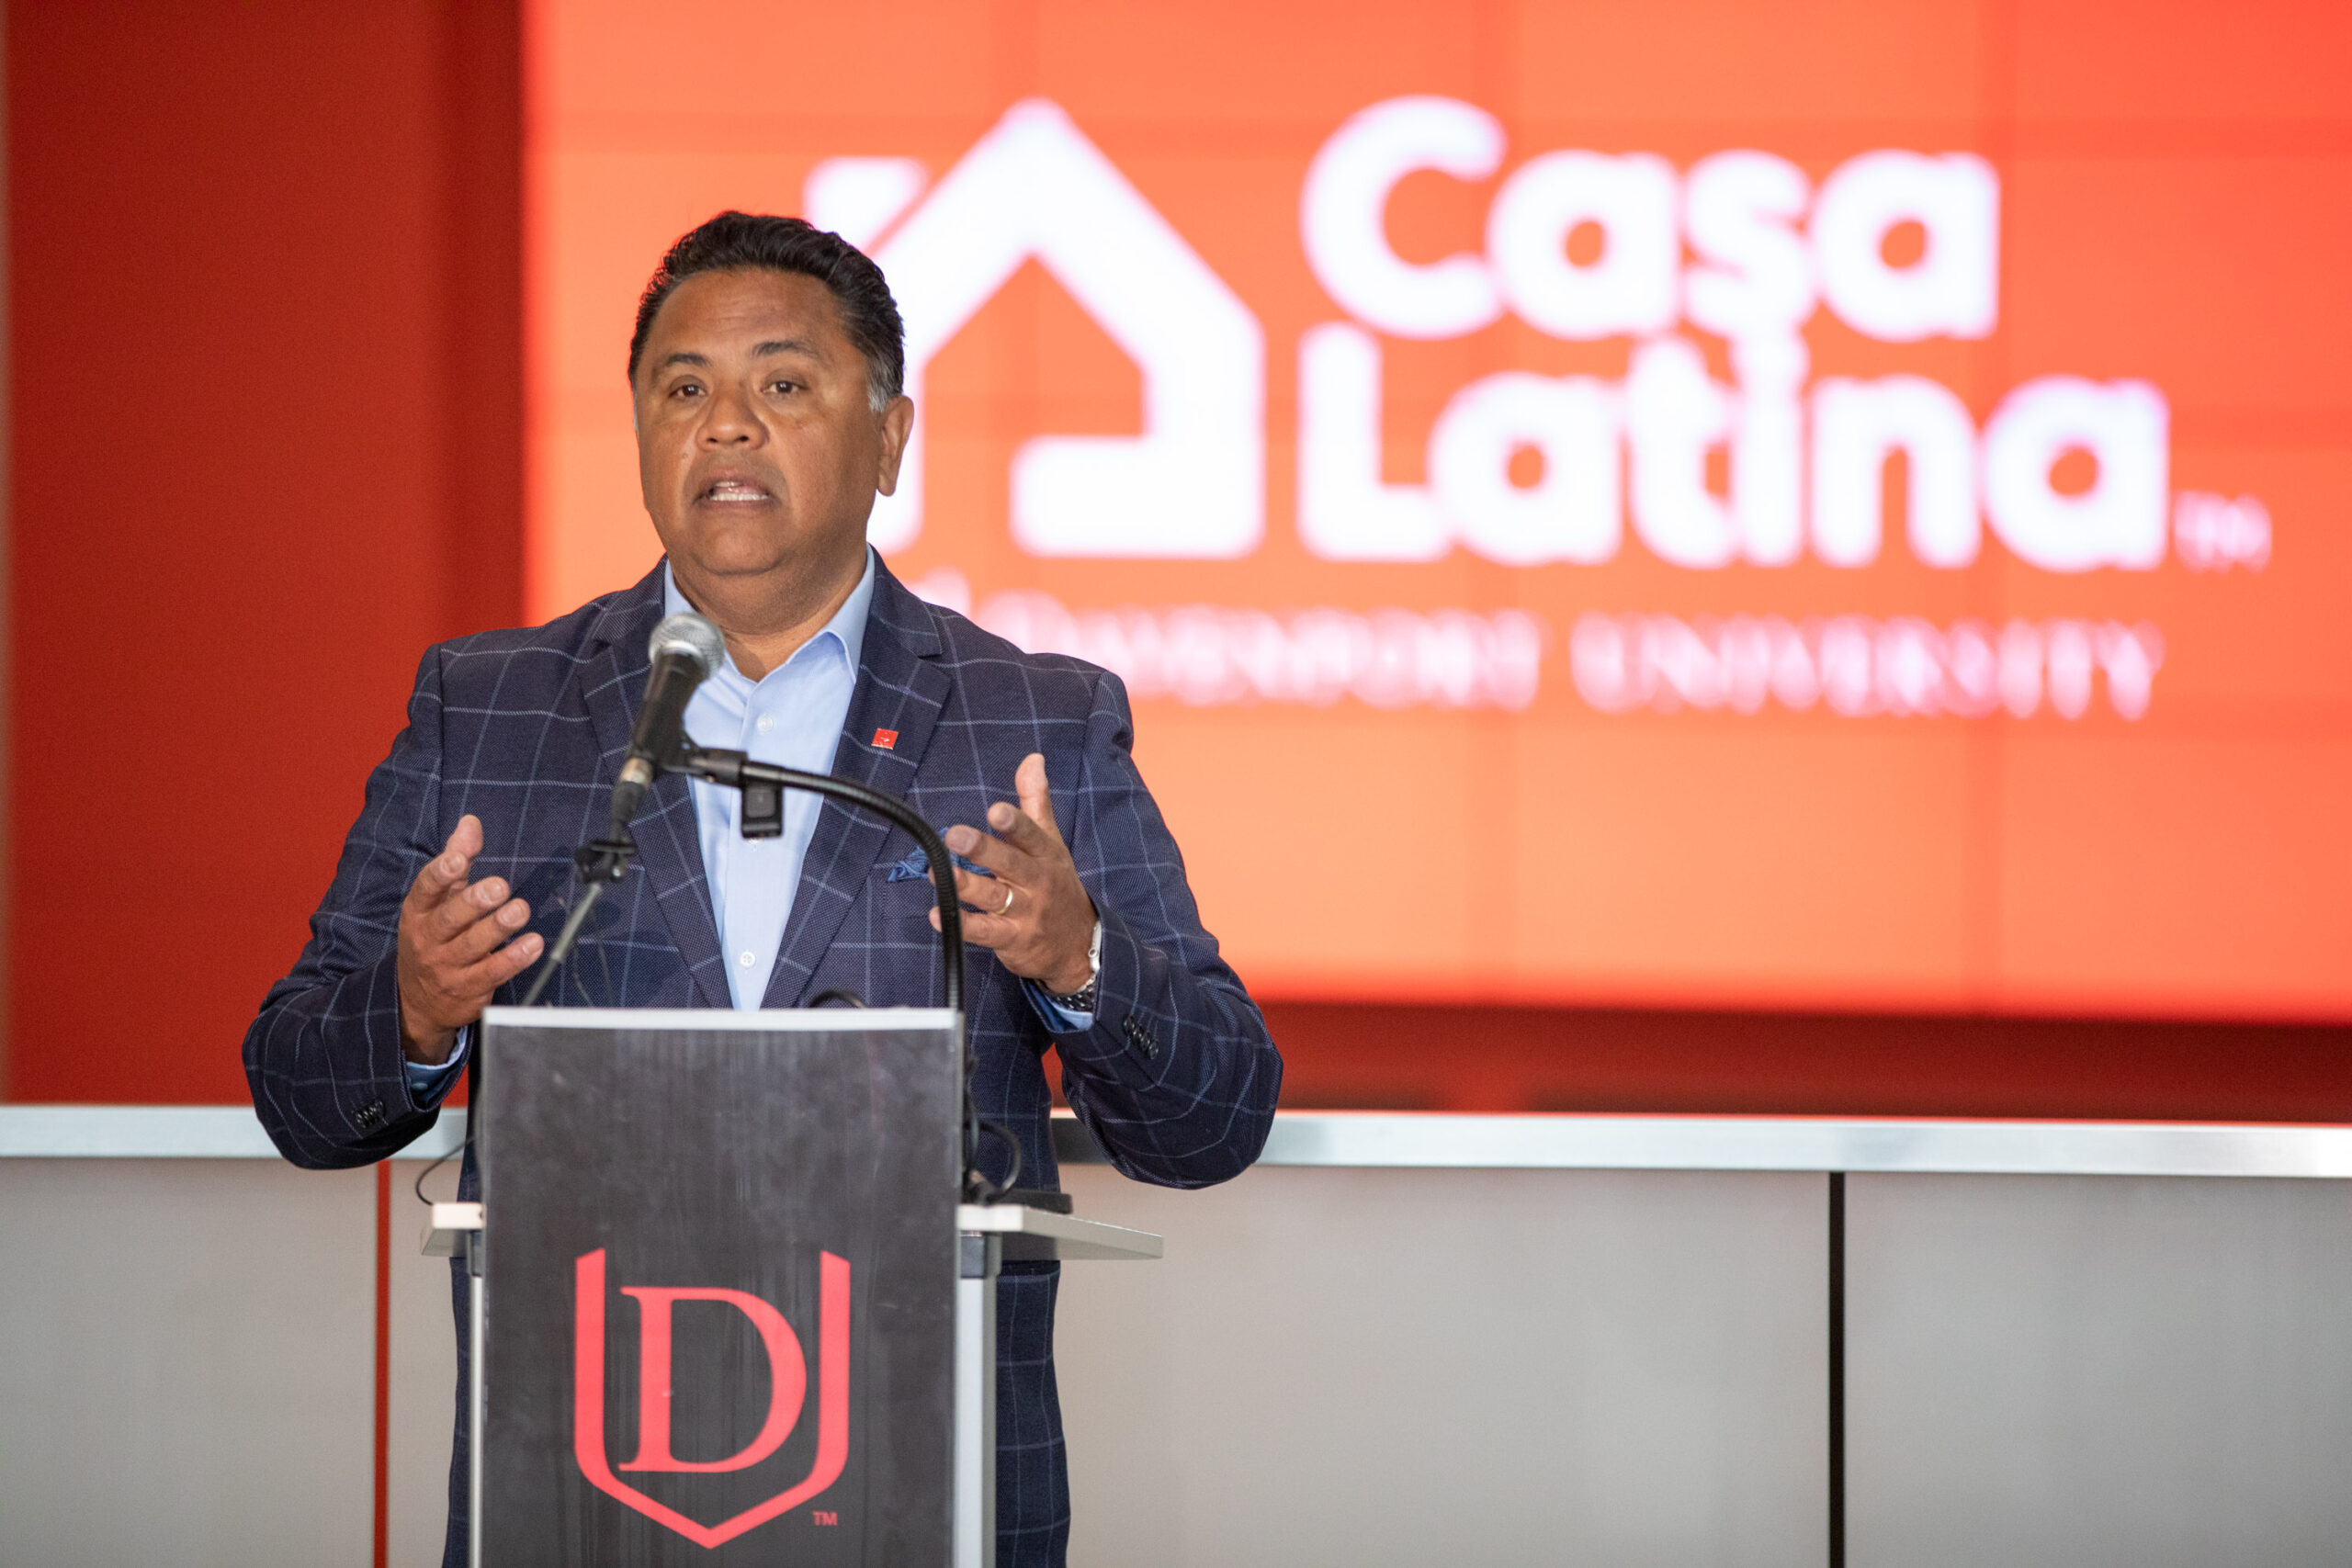 Casa-Latina-press-conference-Carlos-Sanchez-scaled